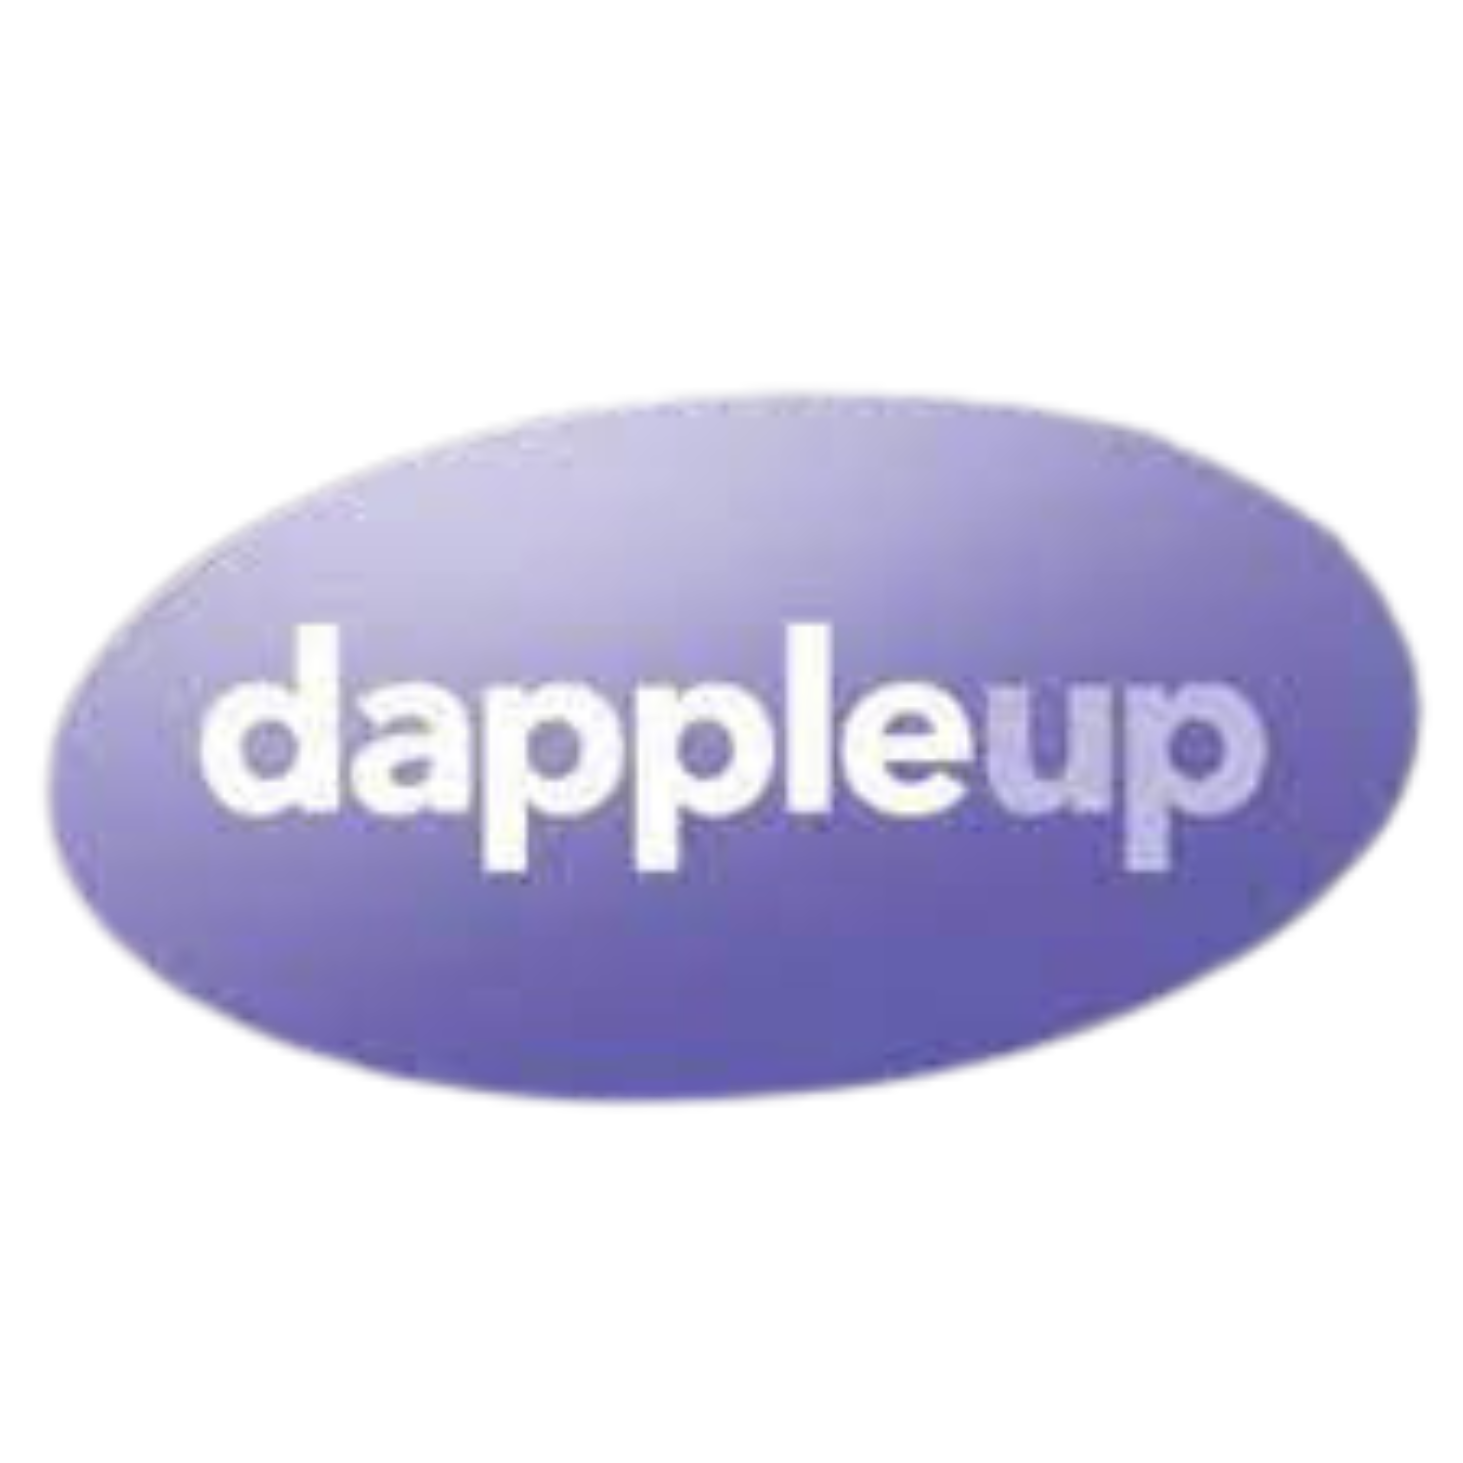 Dapple Up